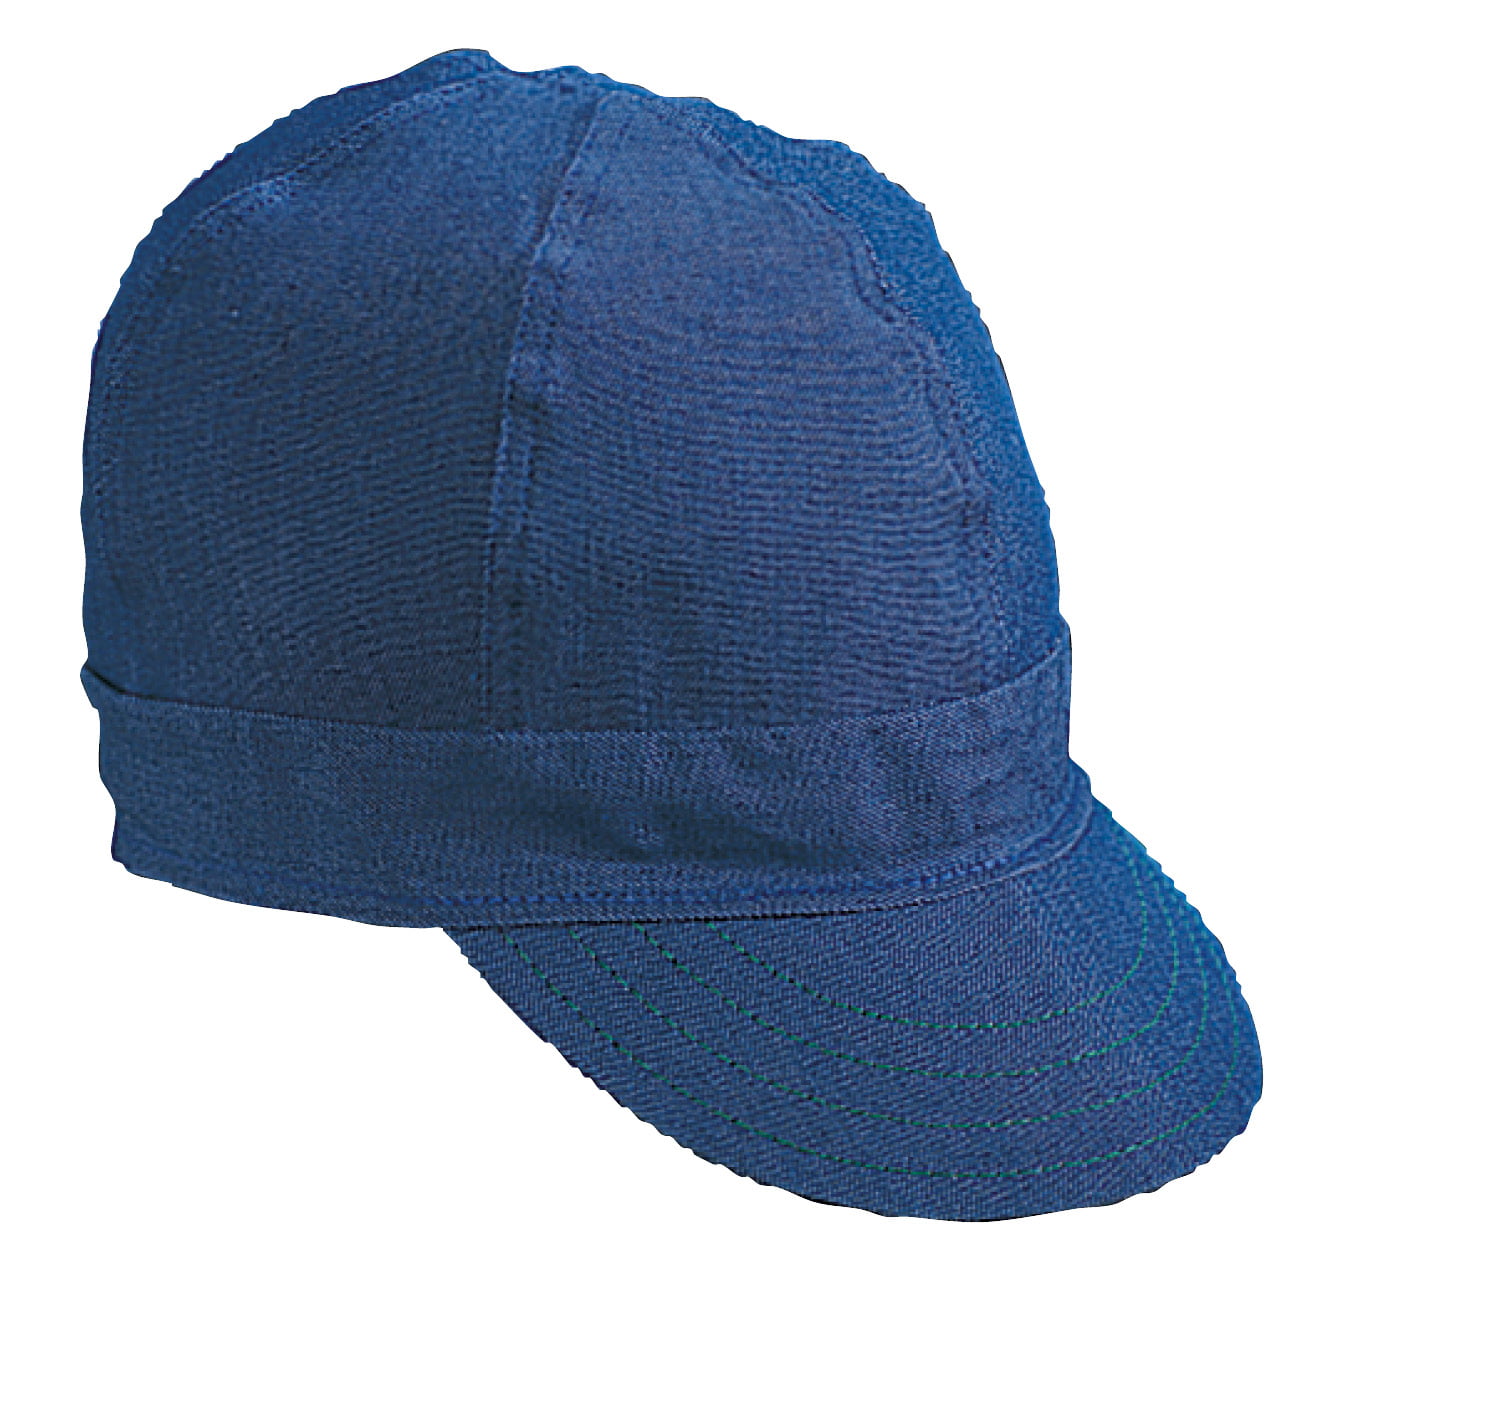 Kromer Blue Denim Style Welder Cap, Cotton, Length 5